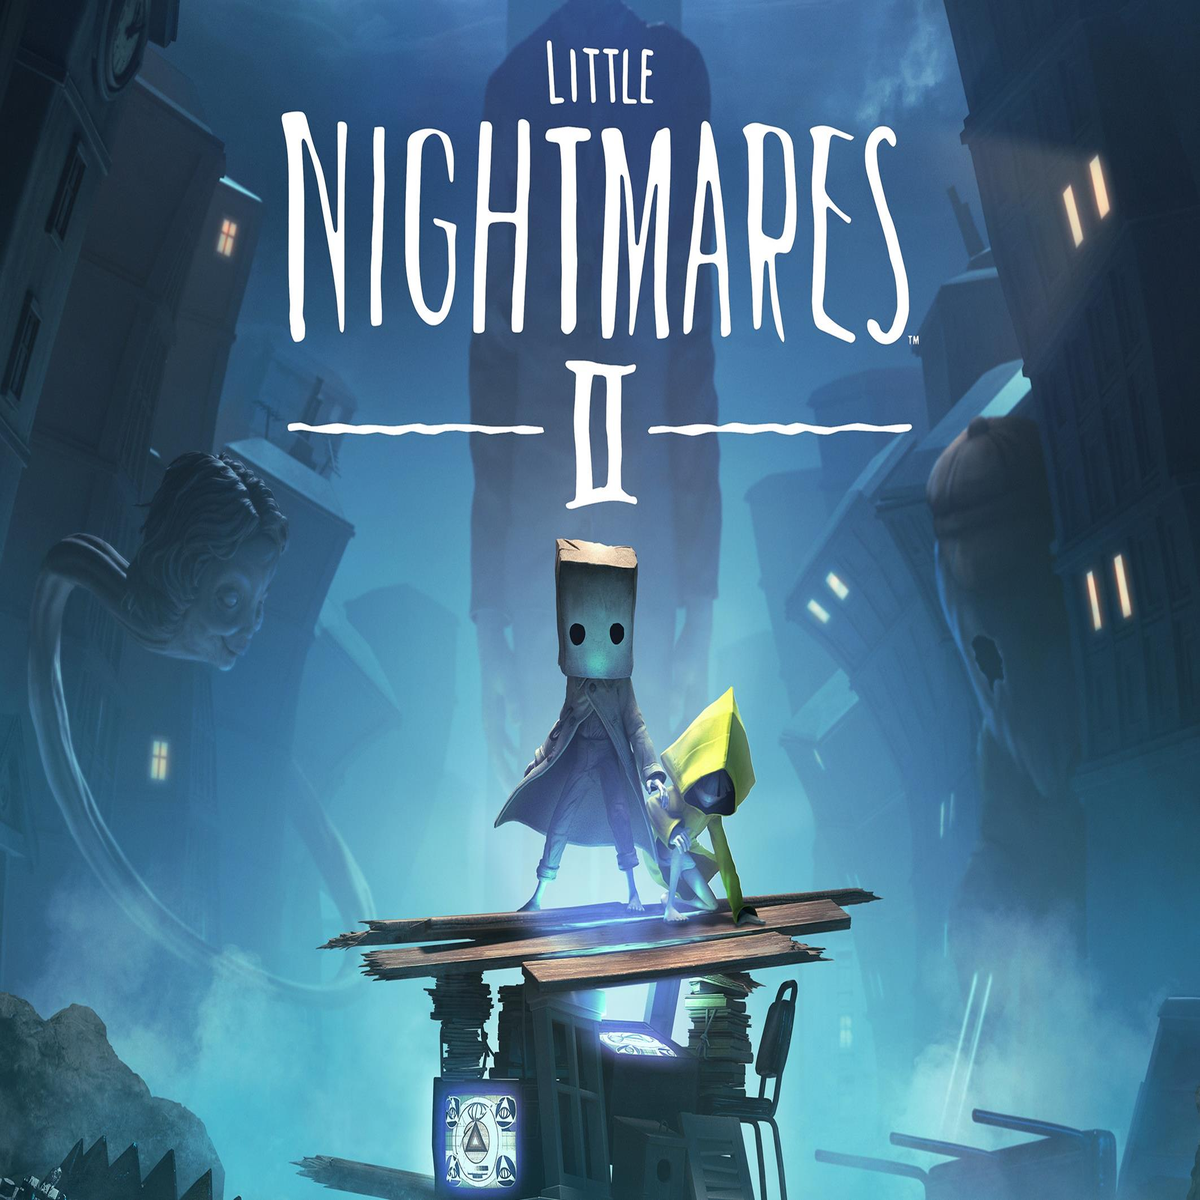 Little Nightmares 2 Official Reveal Trailer - Gamescom 2019 